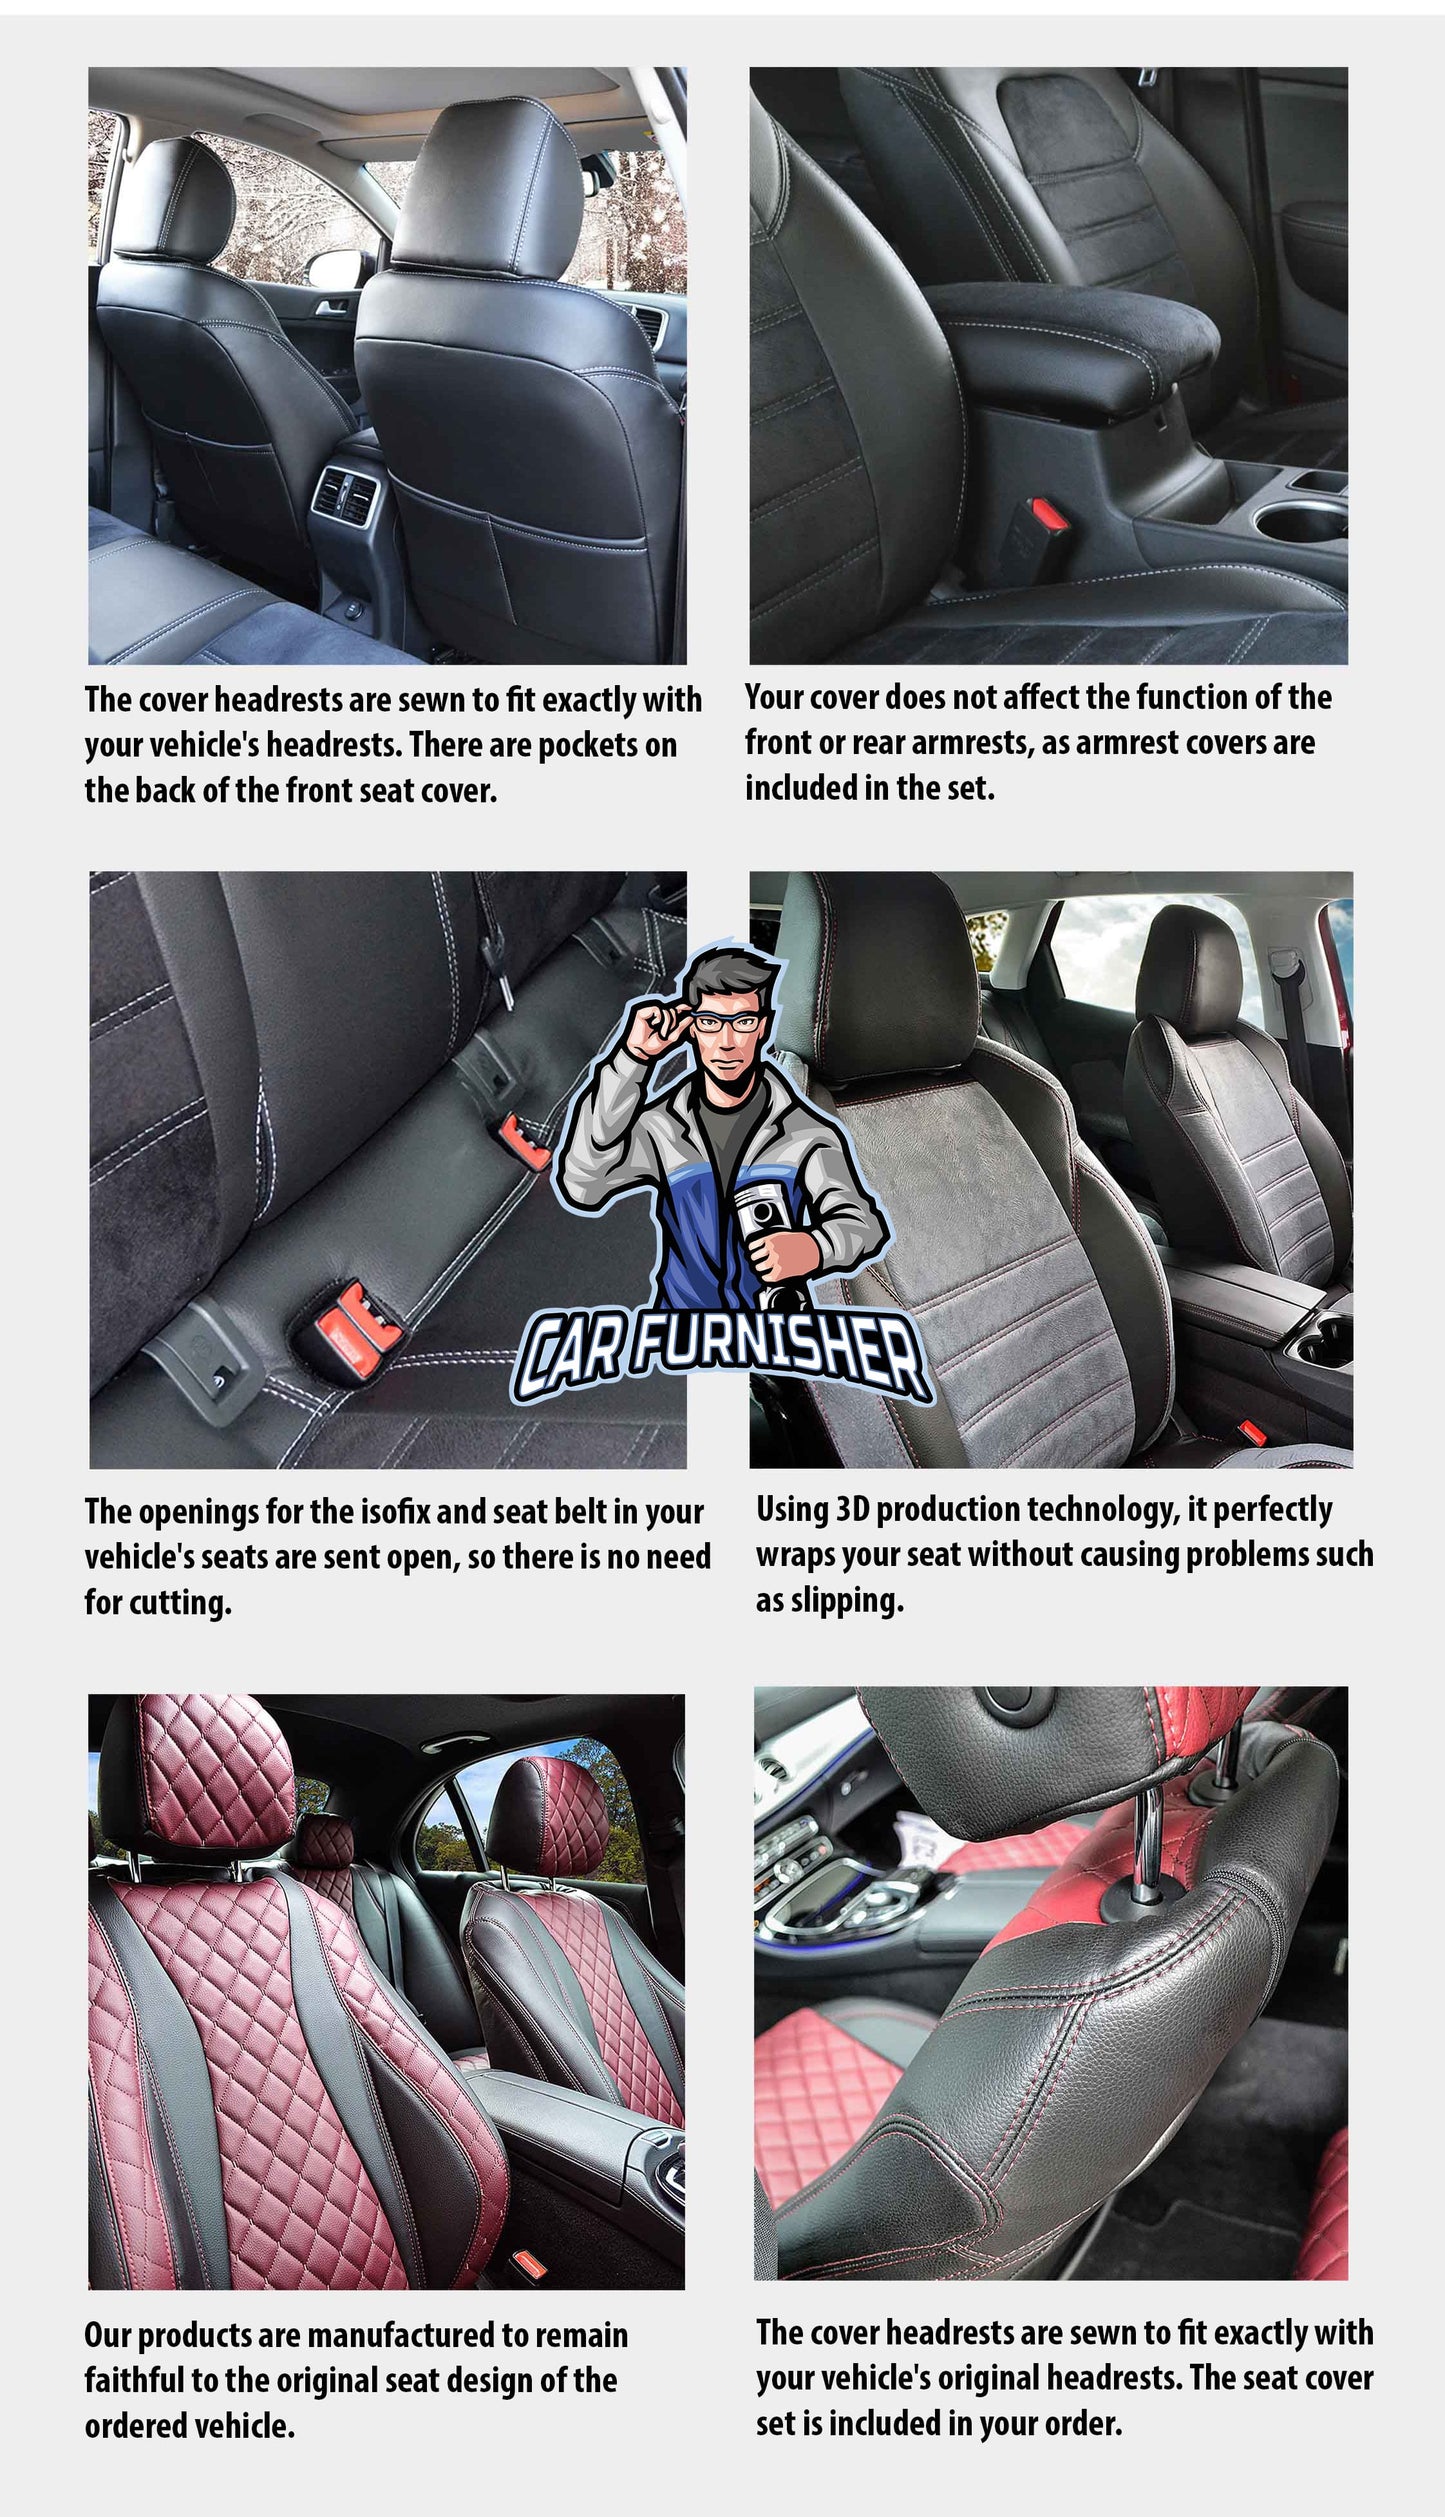 Seat Leon Seat Covers Paris Leather & Jacquard Design Black Leather & Jacquard Fabric